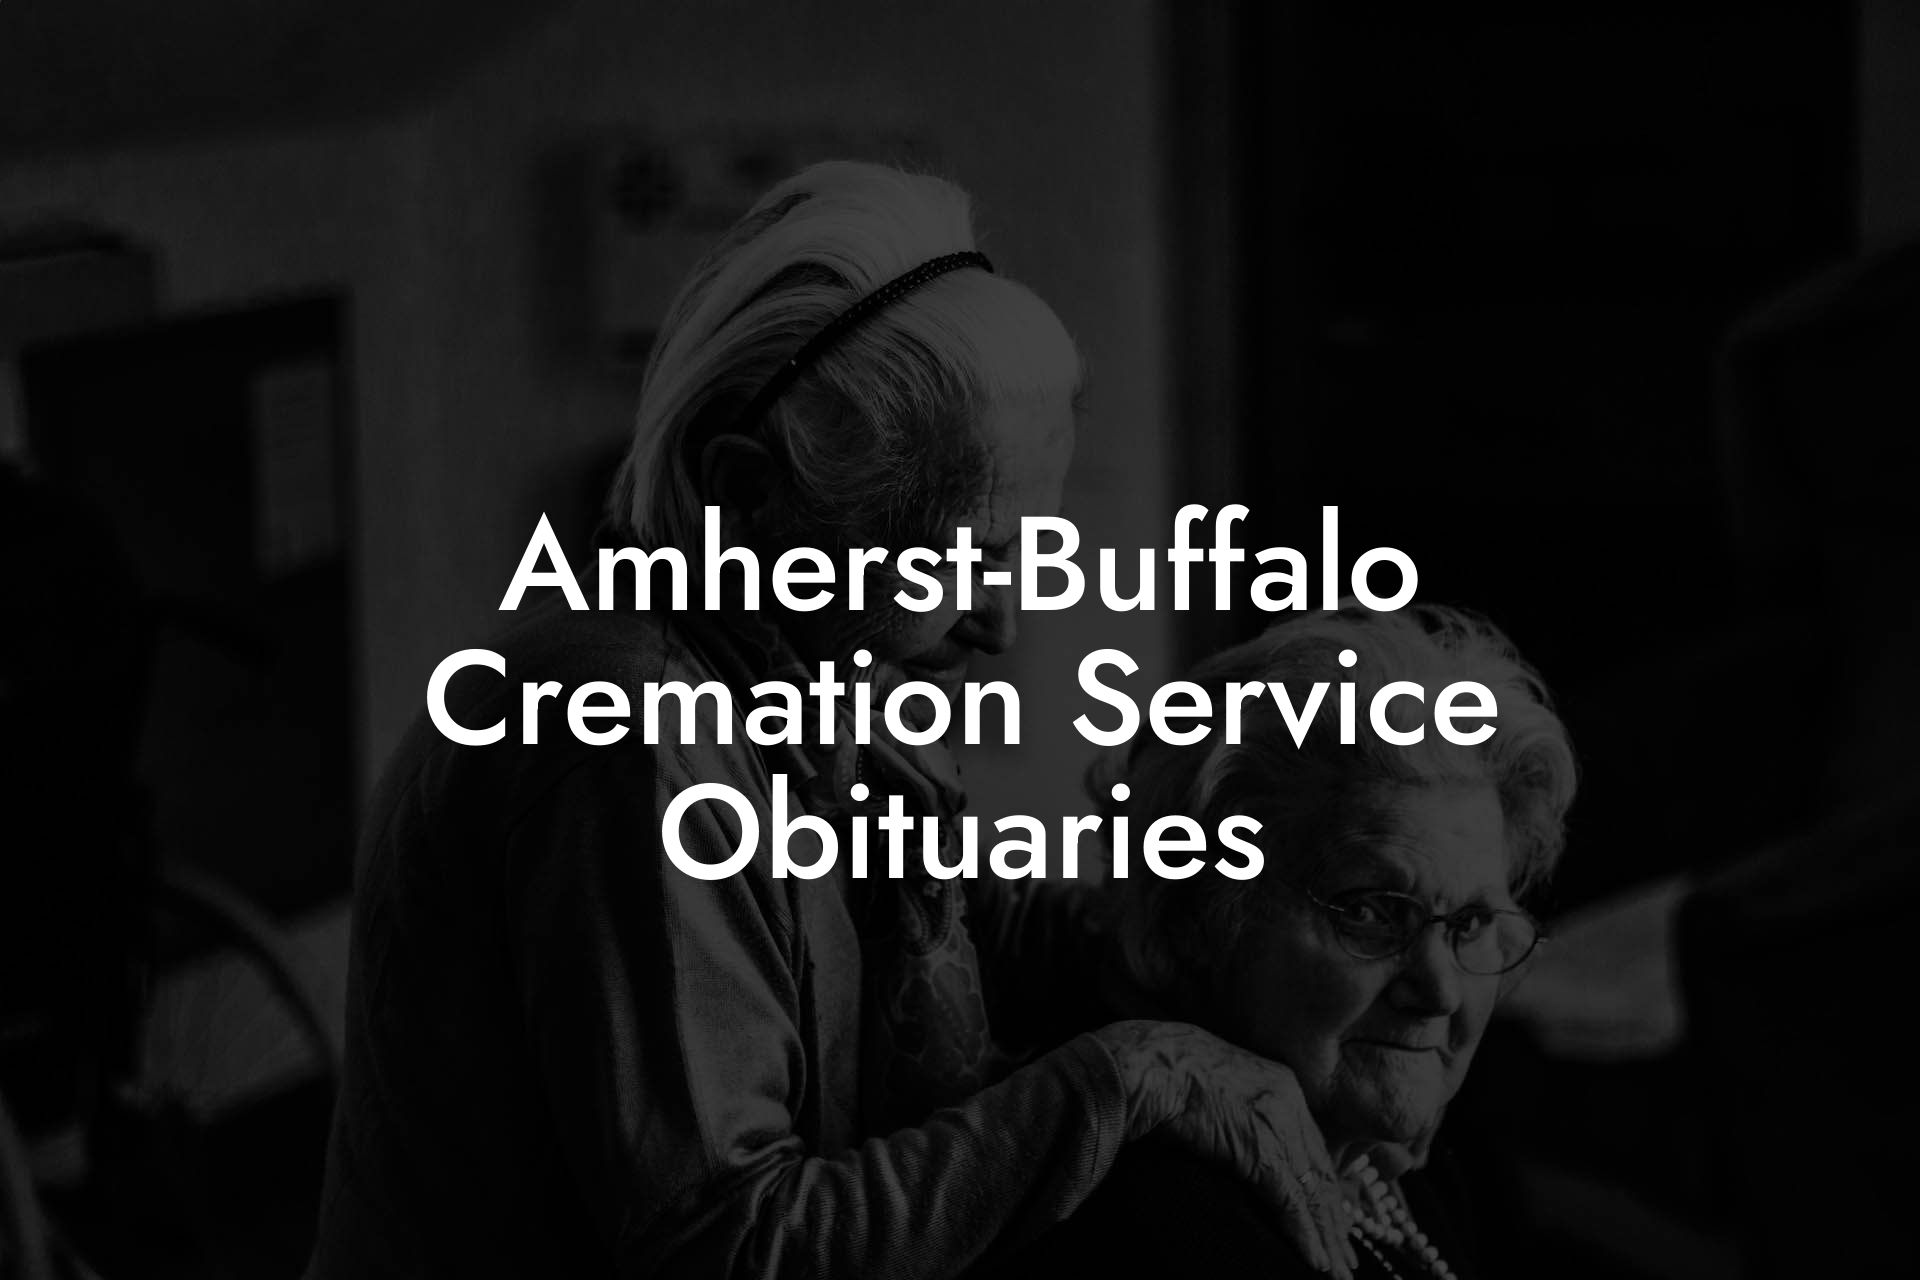 Amherst-Buffalo Cremation Service Obituaries